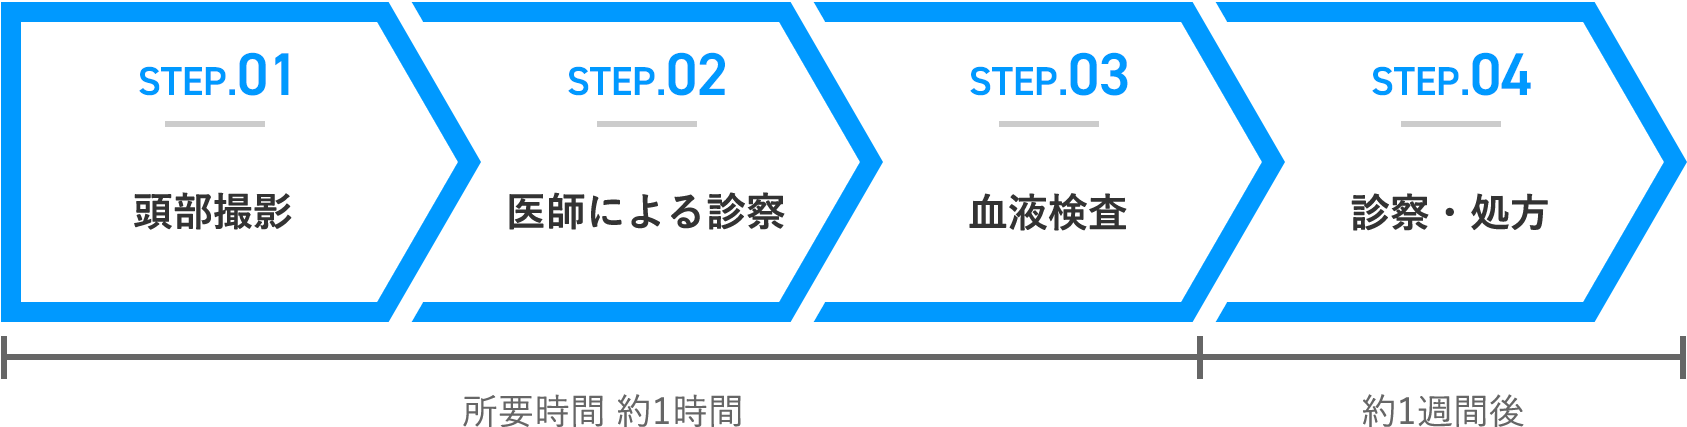 STEP.01 頭部撮影 STEP.02 医師による診察 STEP.03 血液検査 STEP.04 診察・処方